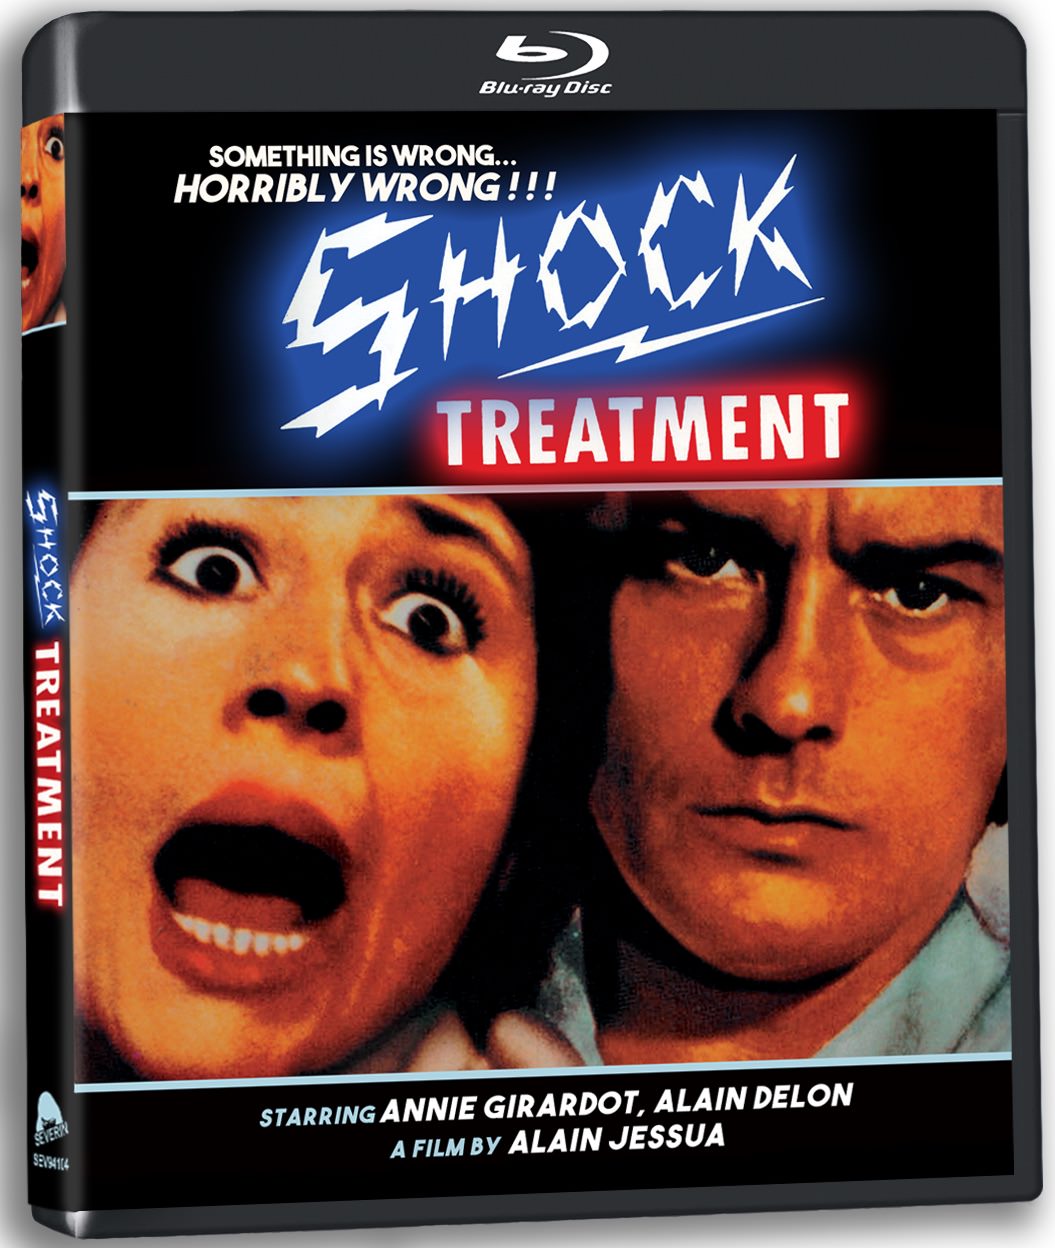 Shock Treatment [2-Disc LE Blu-ray w/Slipcover]